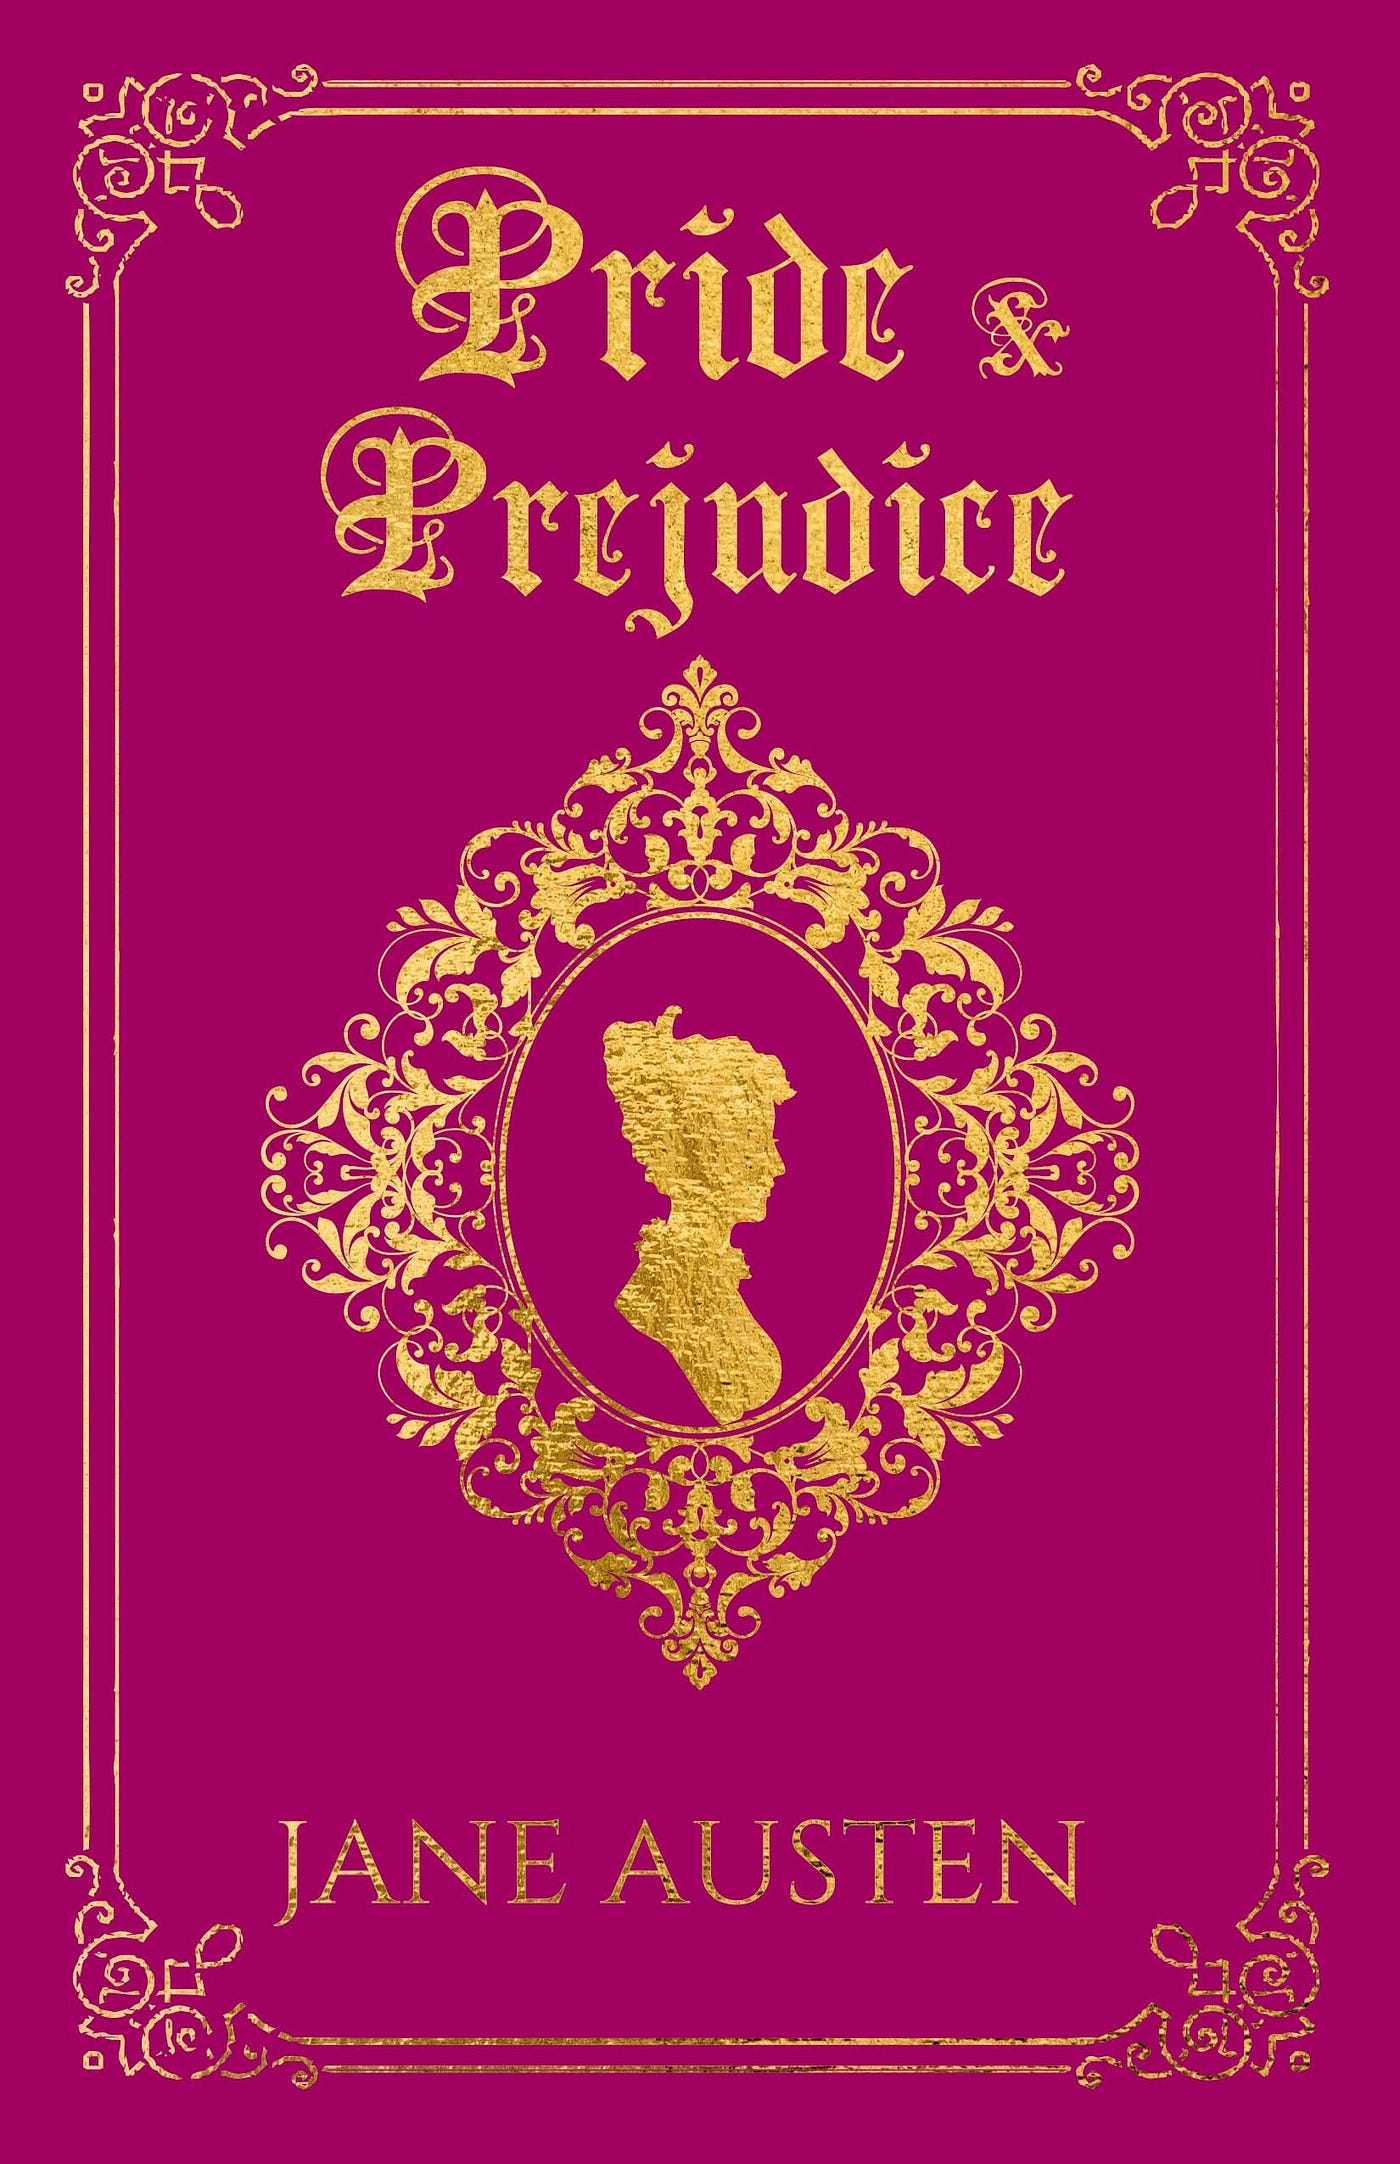 Book Review: Pride & Prejudice by Jane Austen, by Tiffanie Harvey